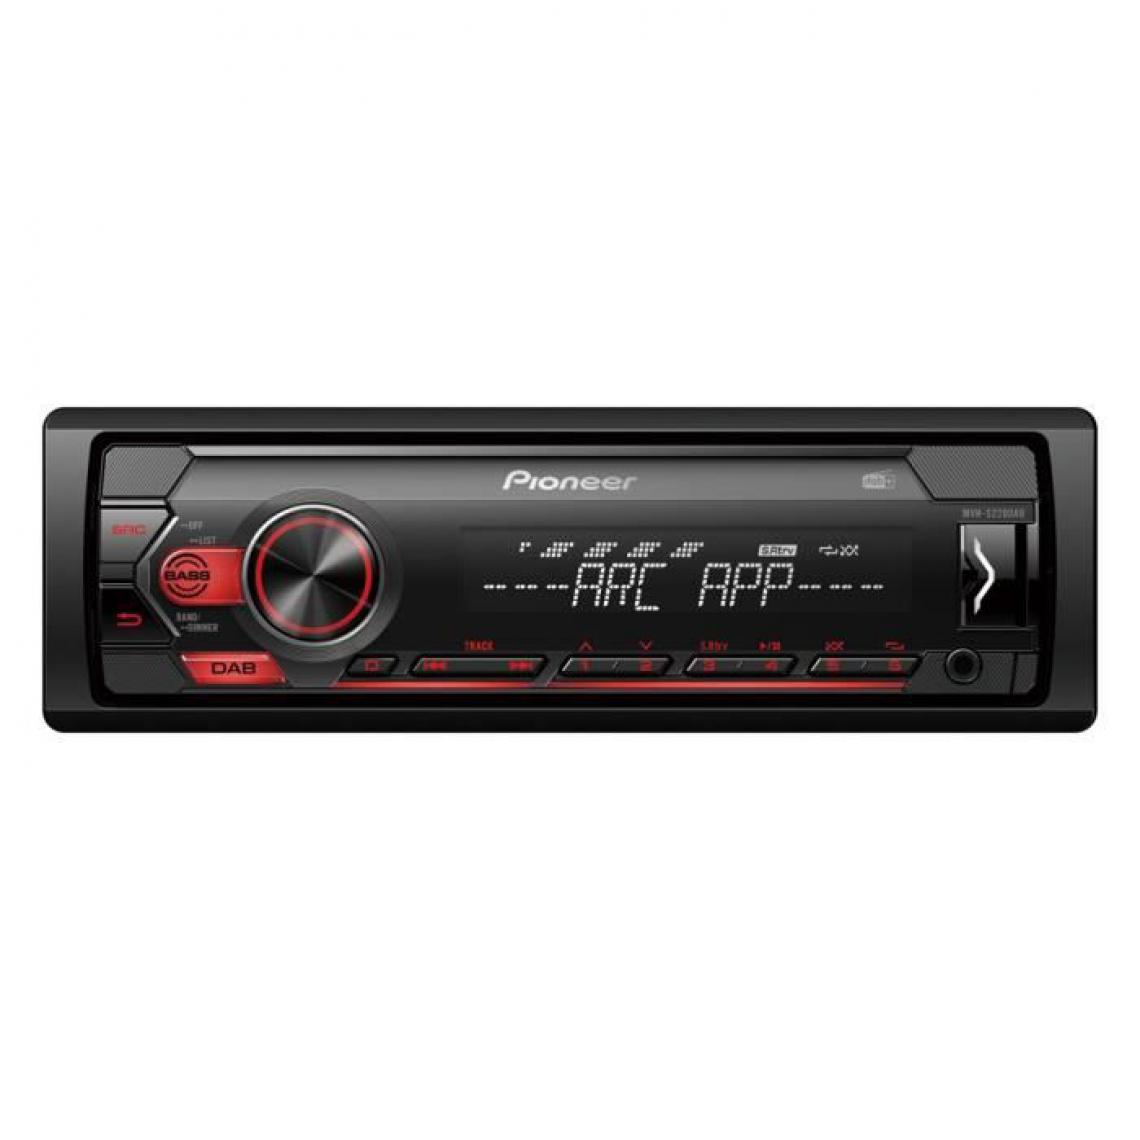 Pioneer - PIONEER Auto Radio RDS - DAB+ - 4 x 50w - USB - iPod - Radio